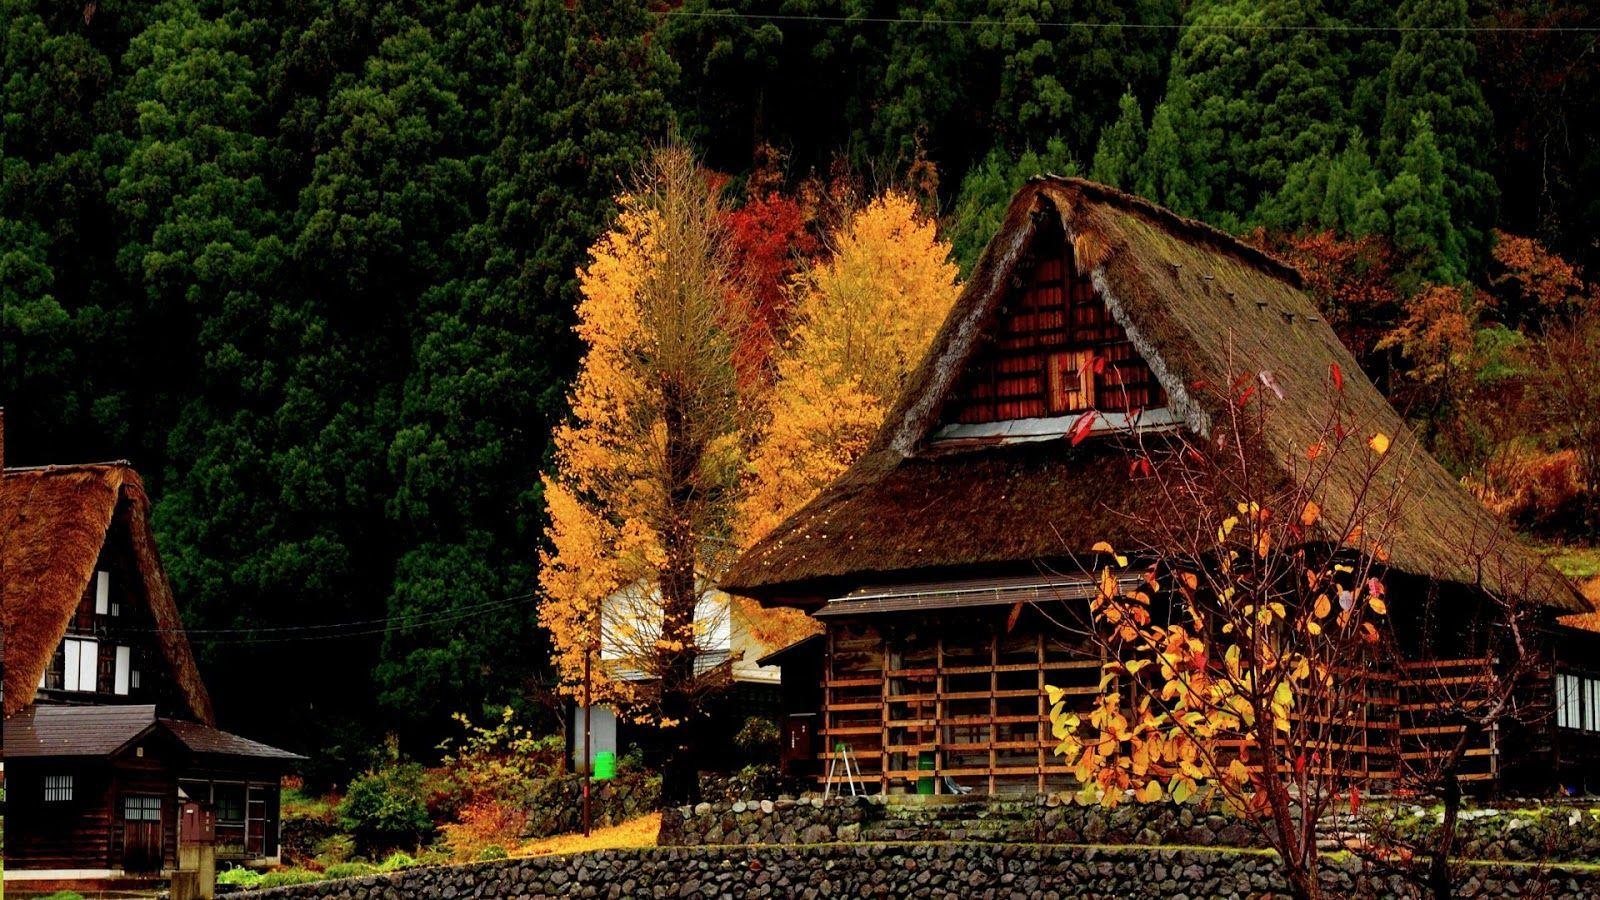 Autumn Cottage Wallpaper Free Autumn Cottage Background